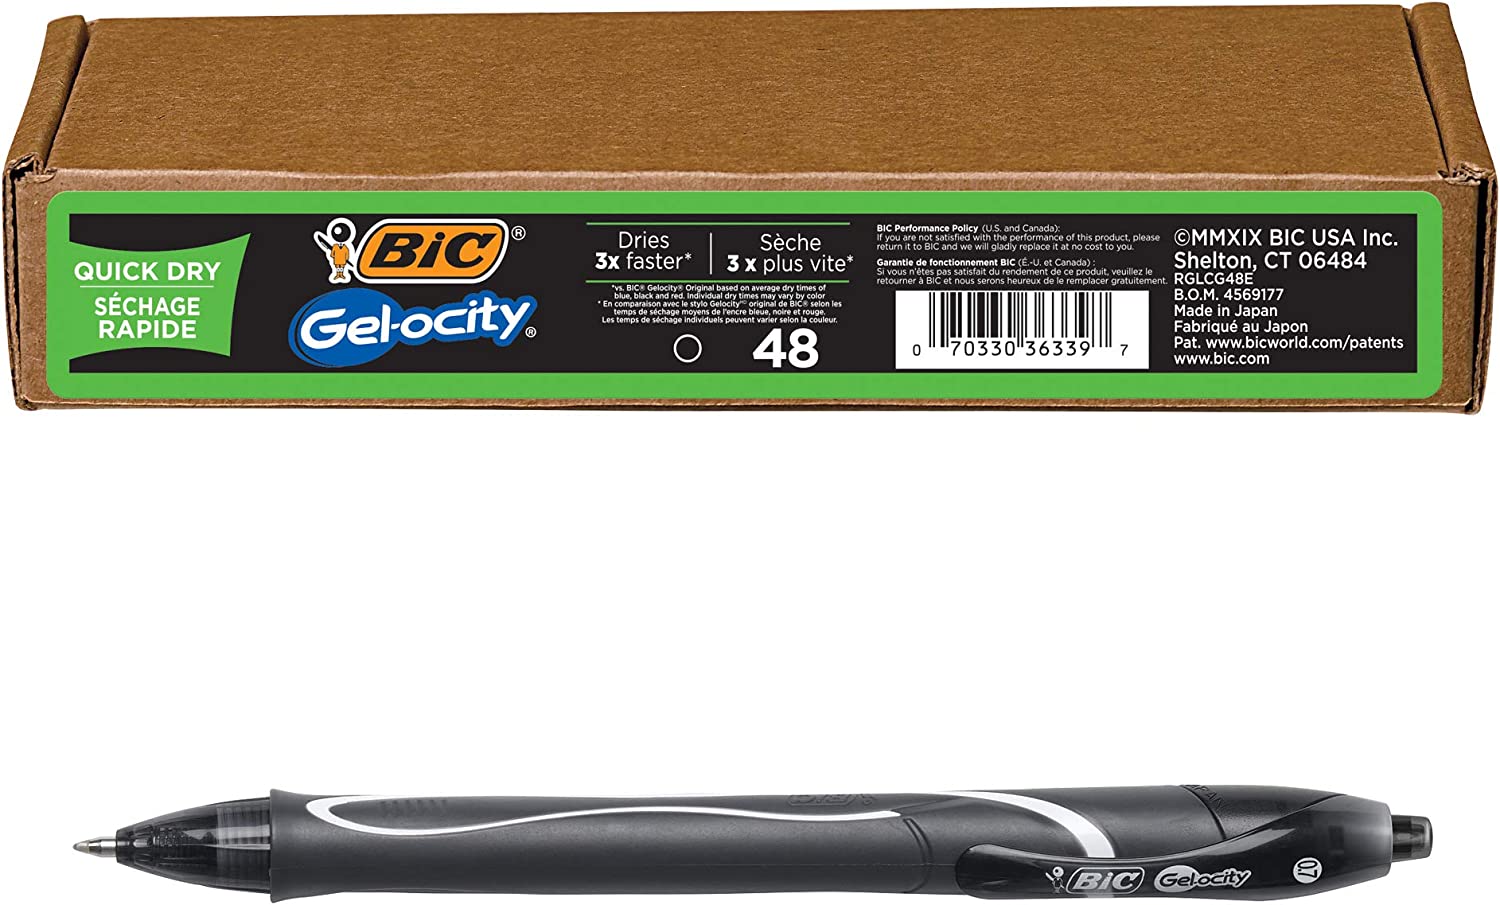 BIC Gel-ocity Retractable Quick Dry Gel Pen, Medium Point, Black